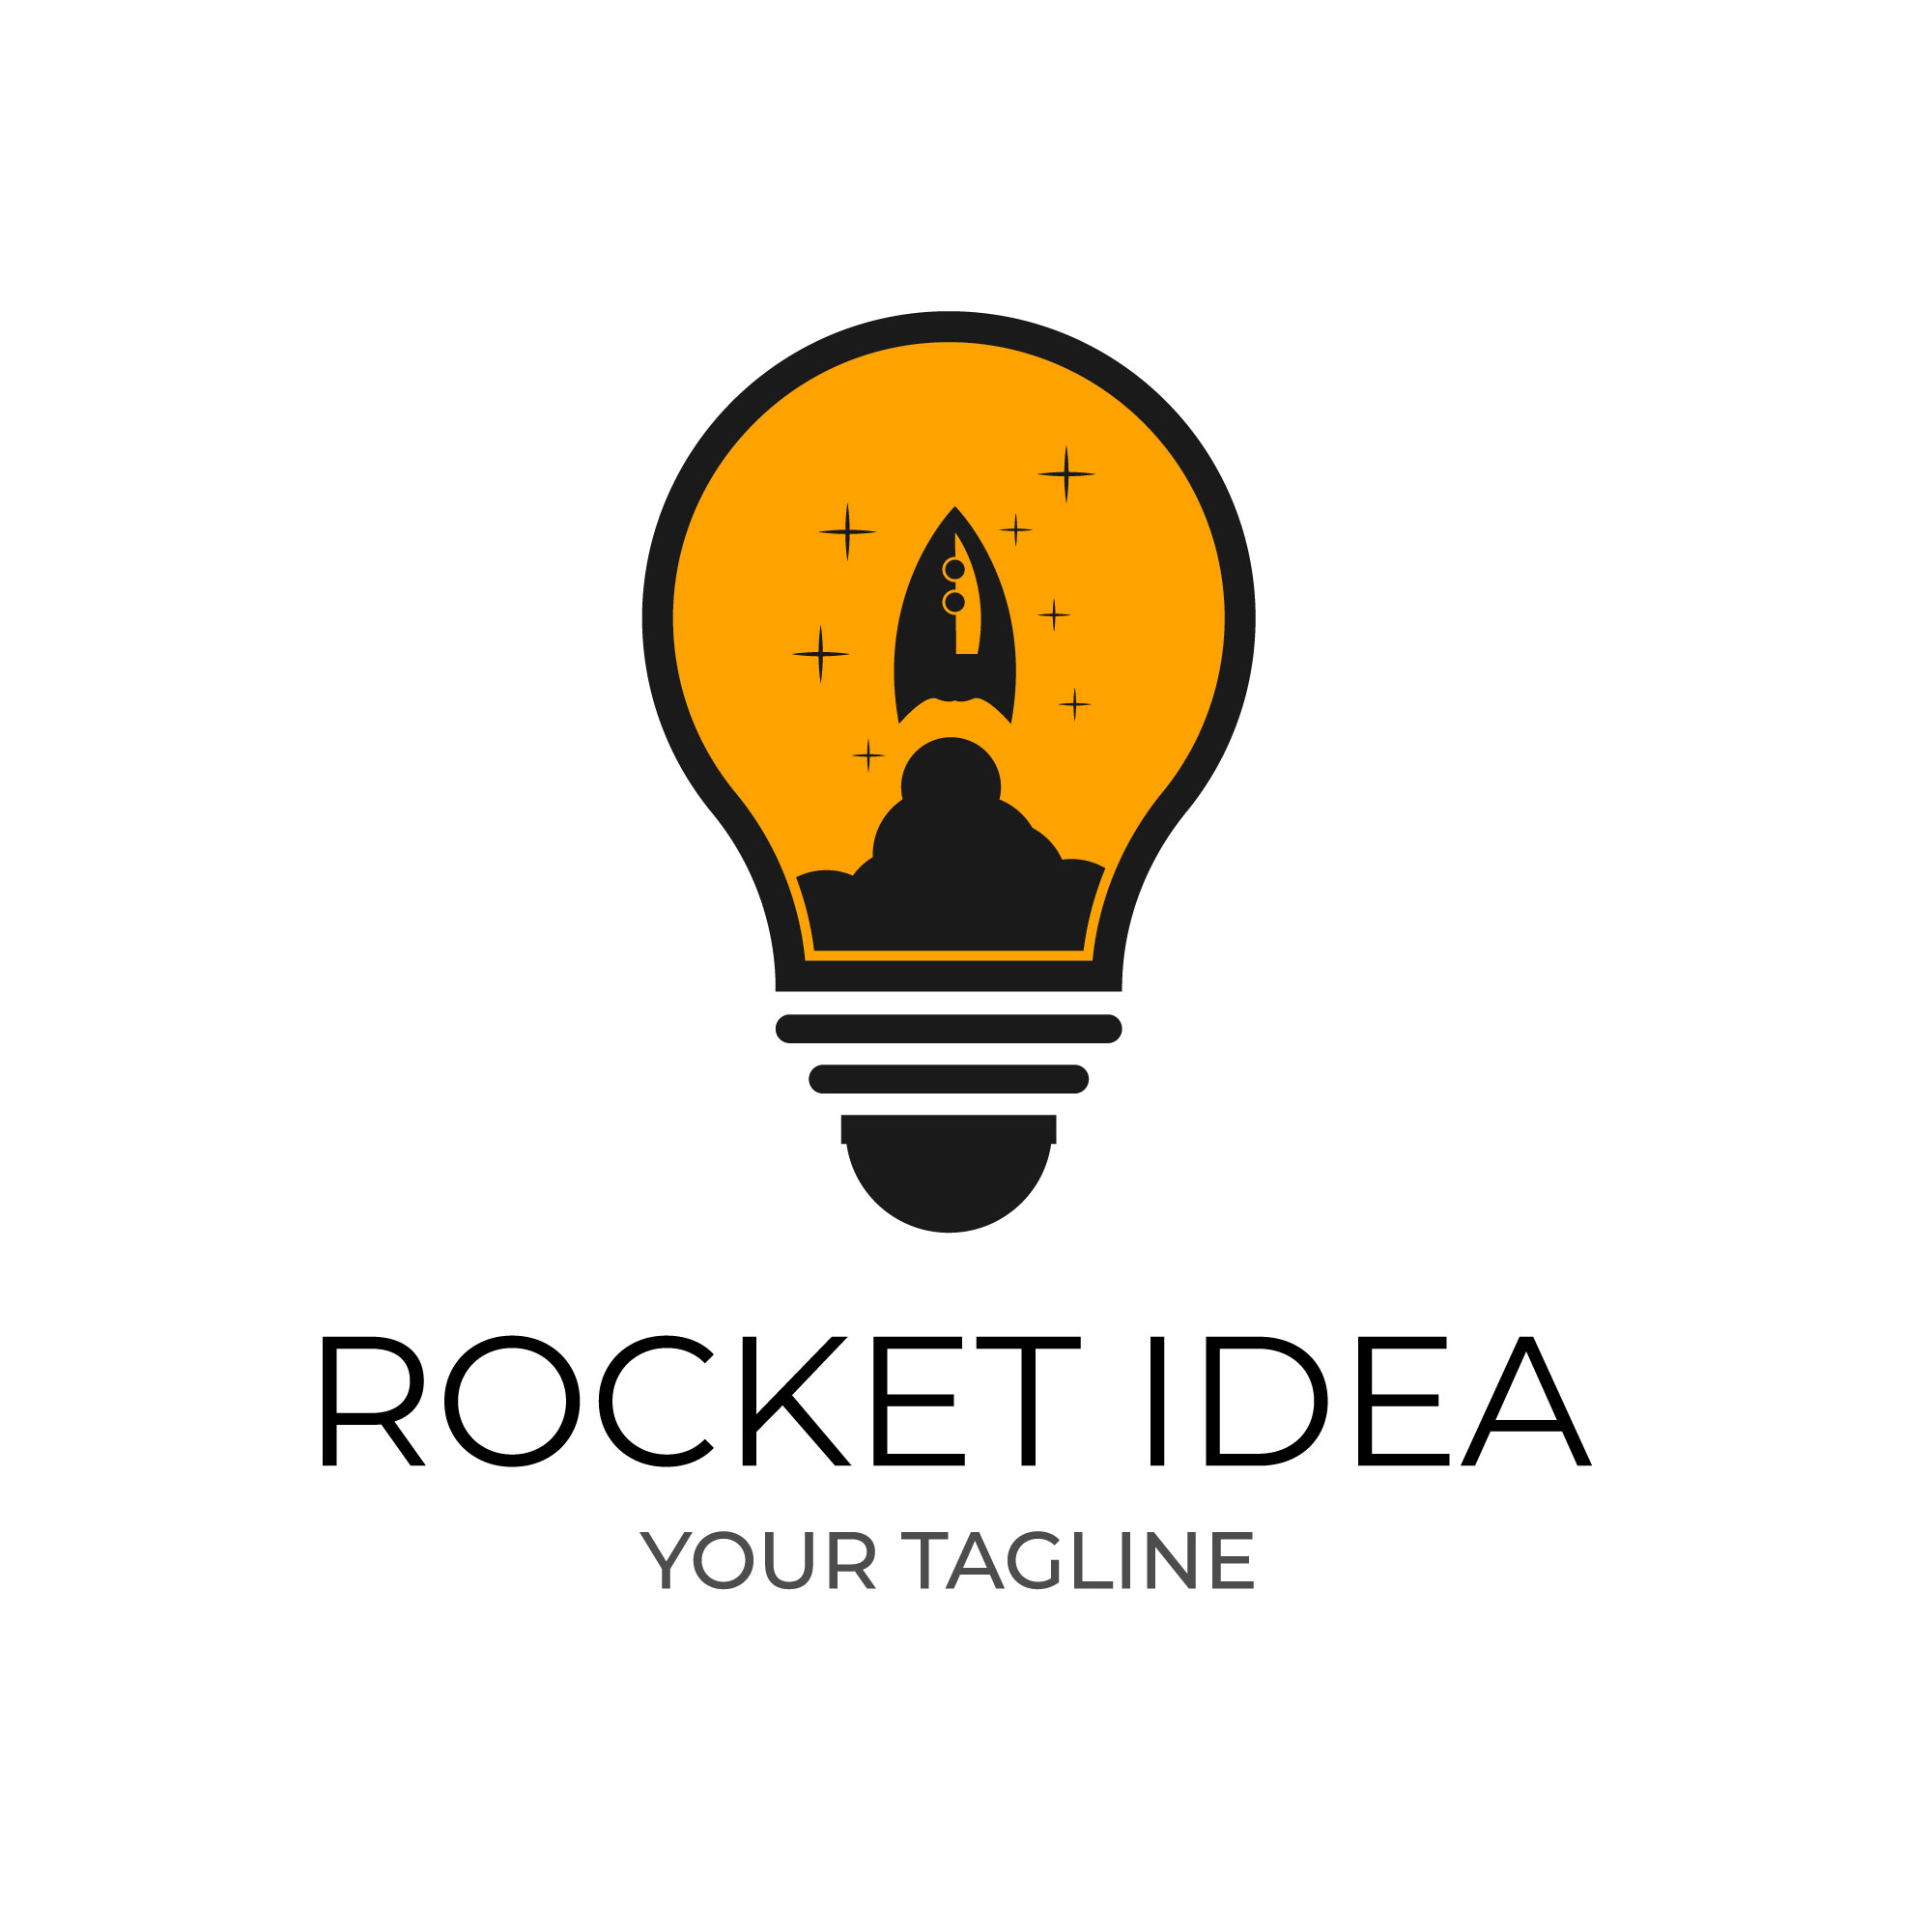 Rocket idea logo designs for marketing agency